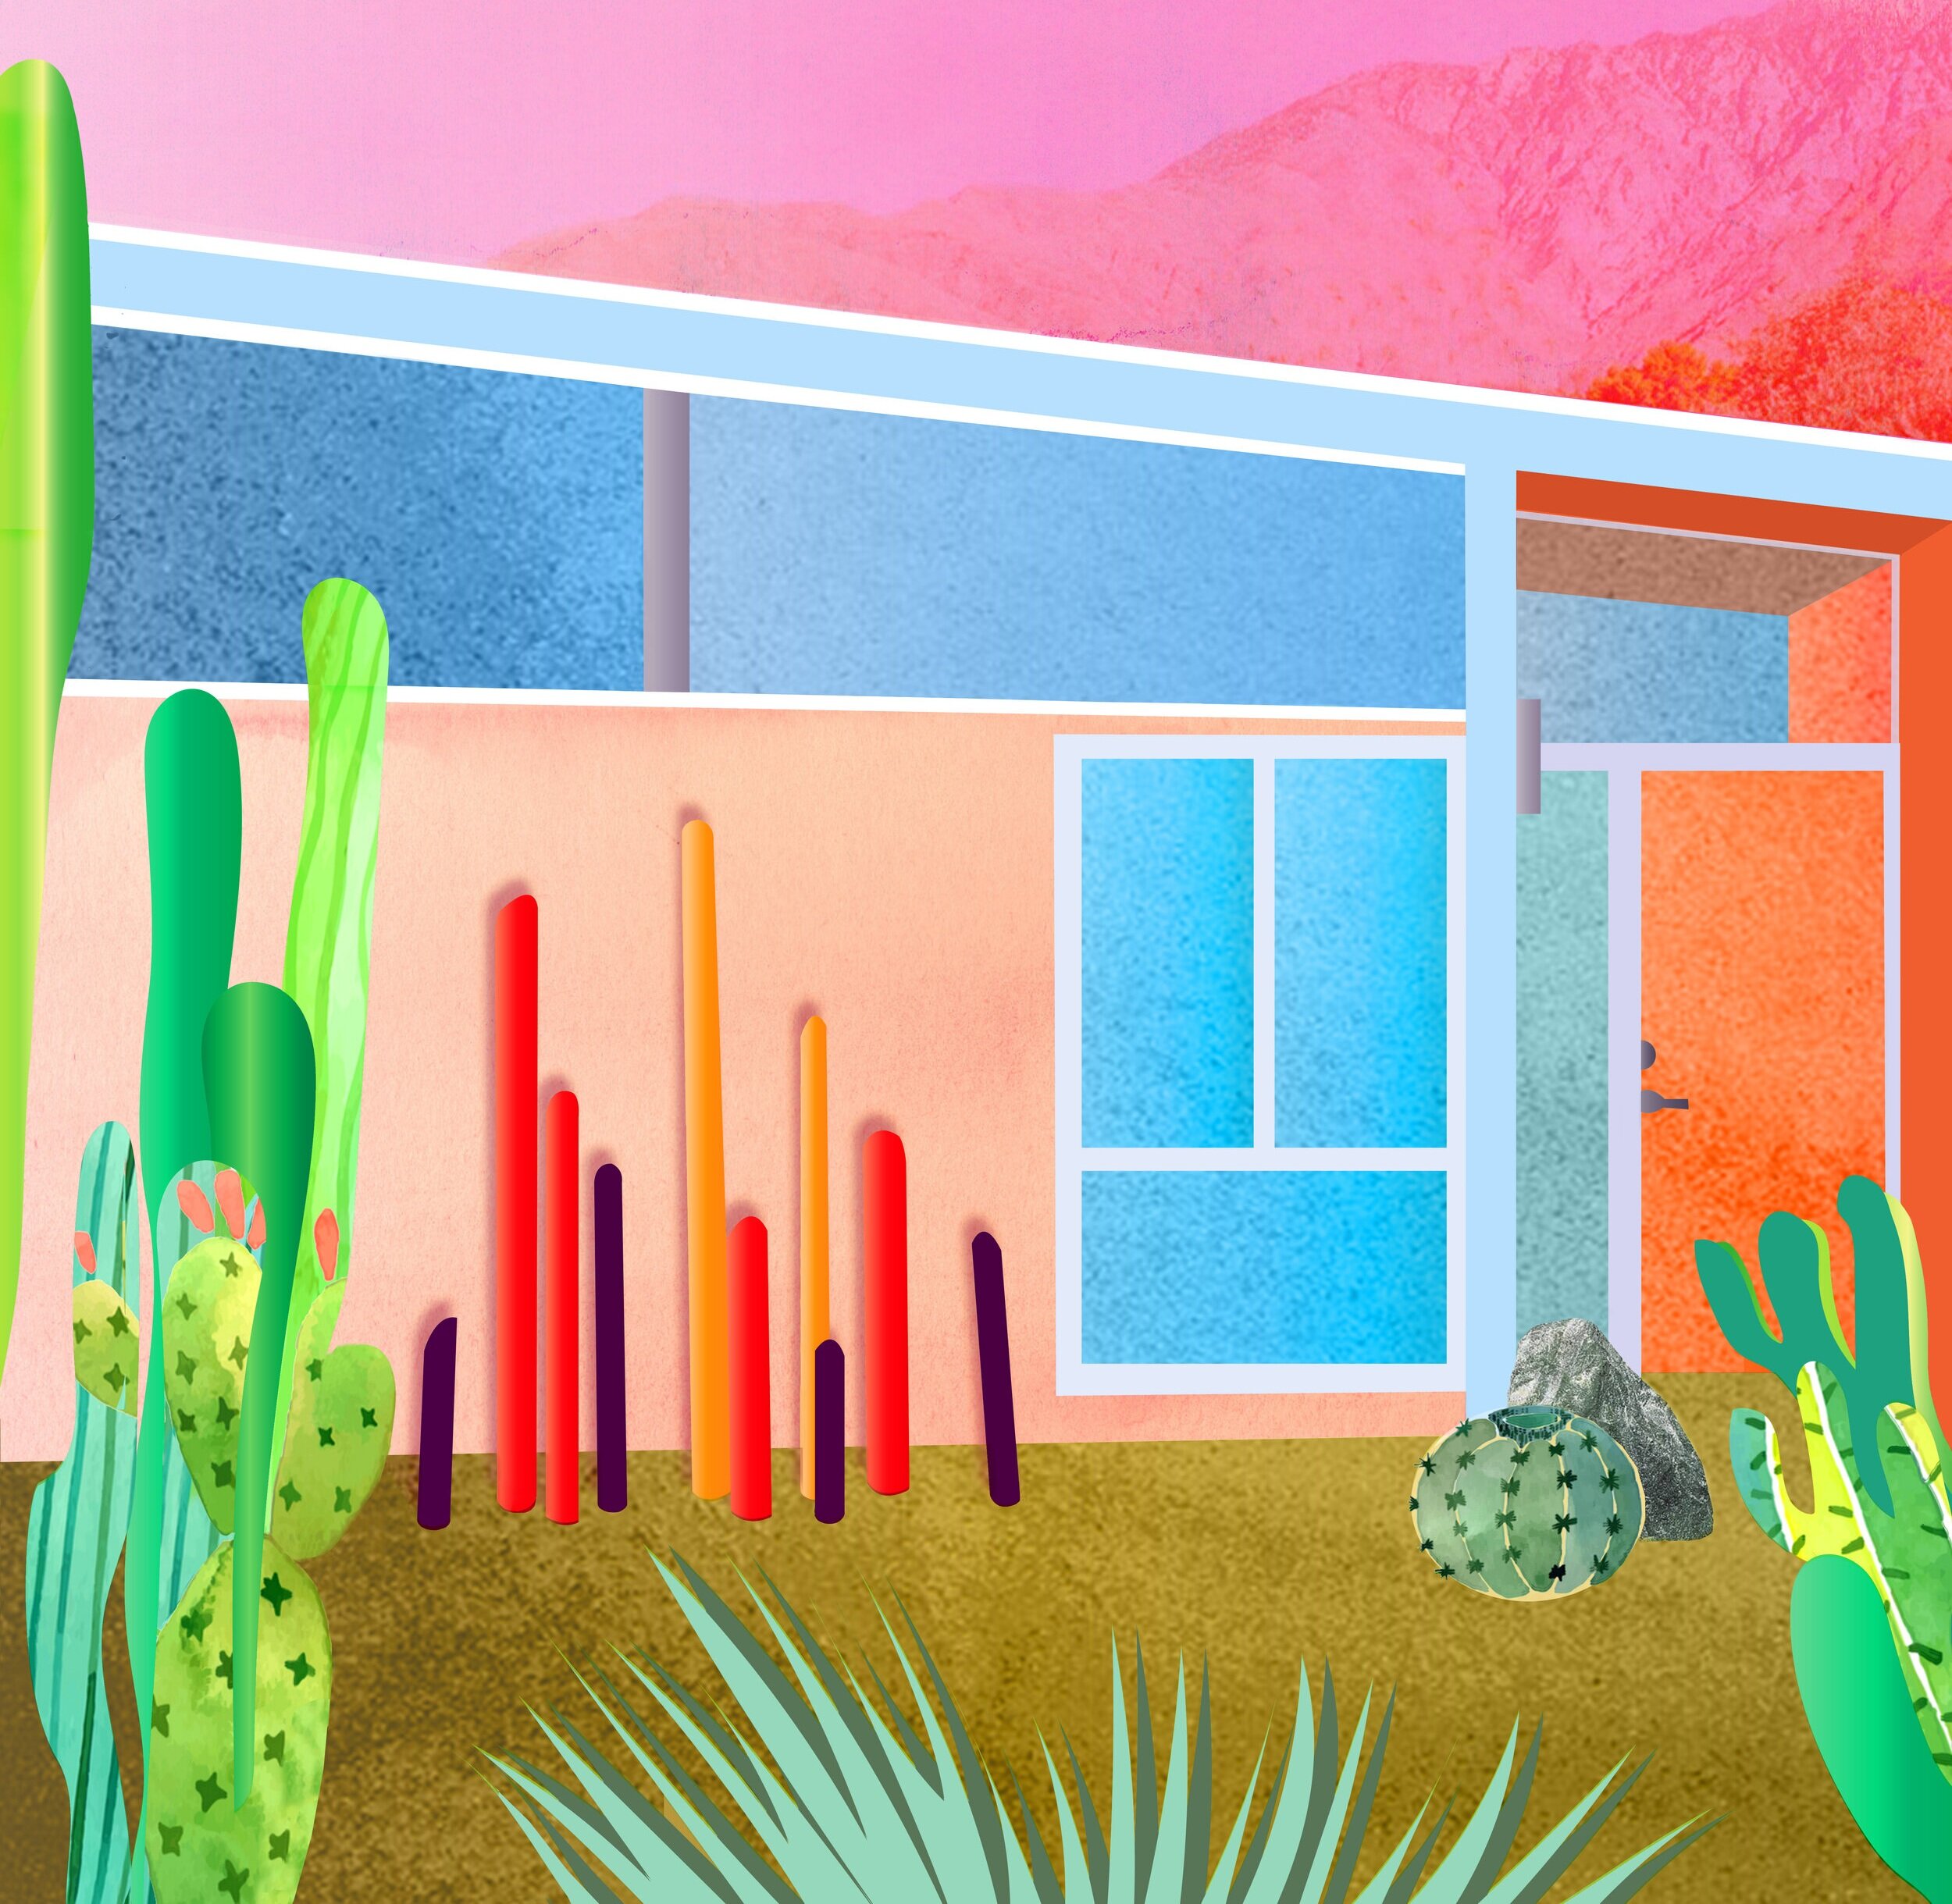  Dream Home, Digital Illustration, 2020 